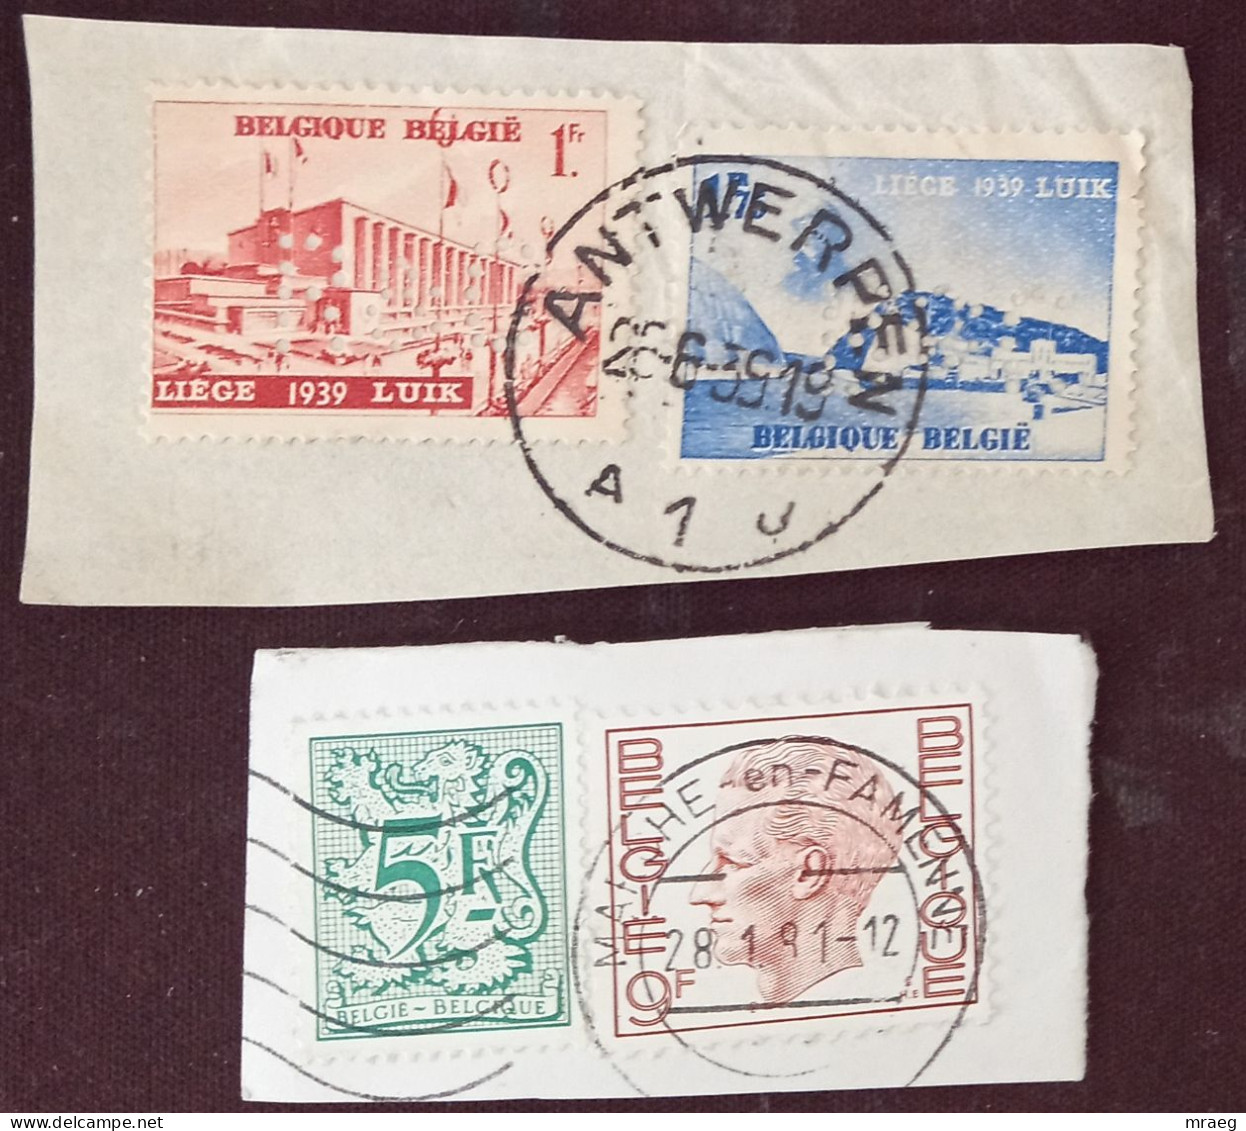 BELGIUM  1939 & 1981 TWO FRAGMENTS   F VF - Storia Postale